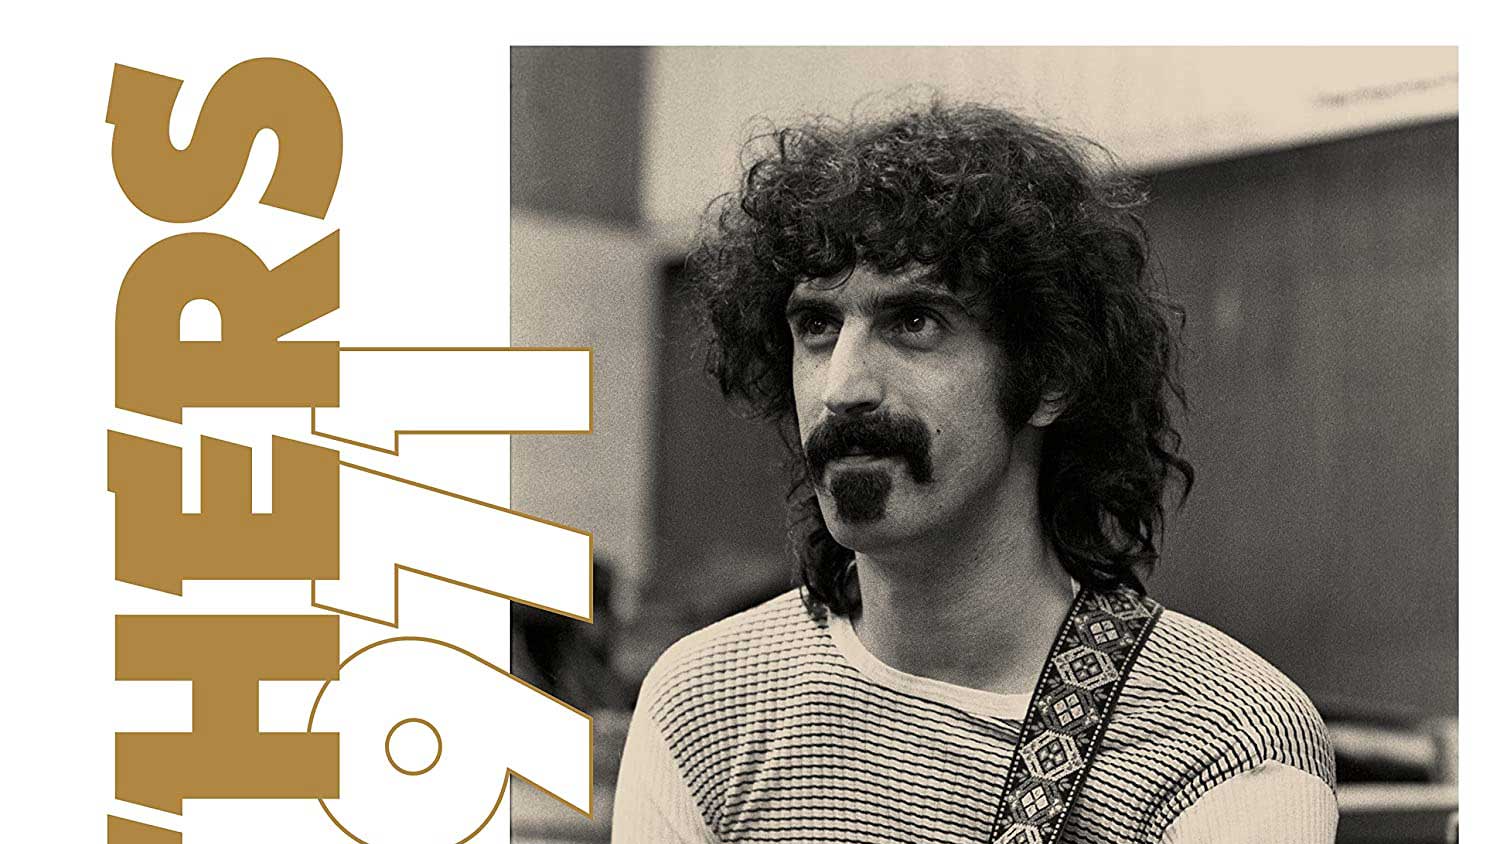 Frank Zappa - Topic 